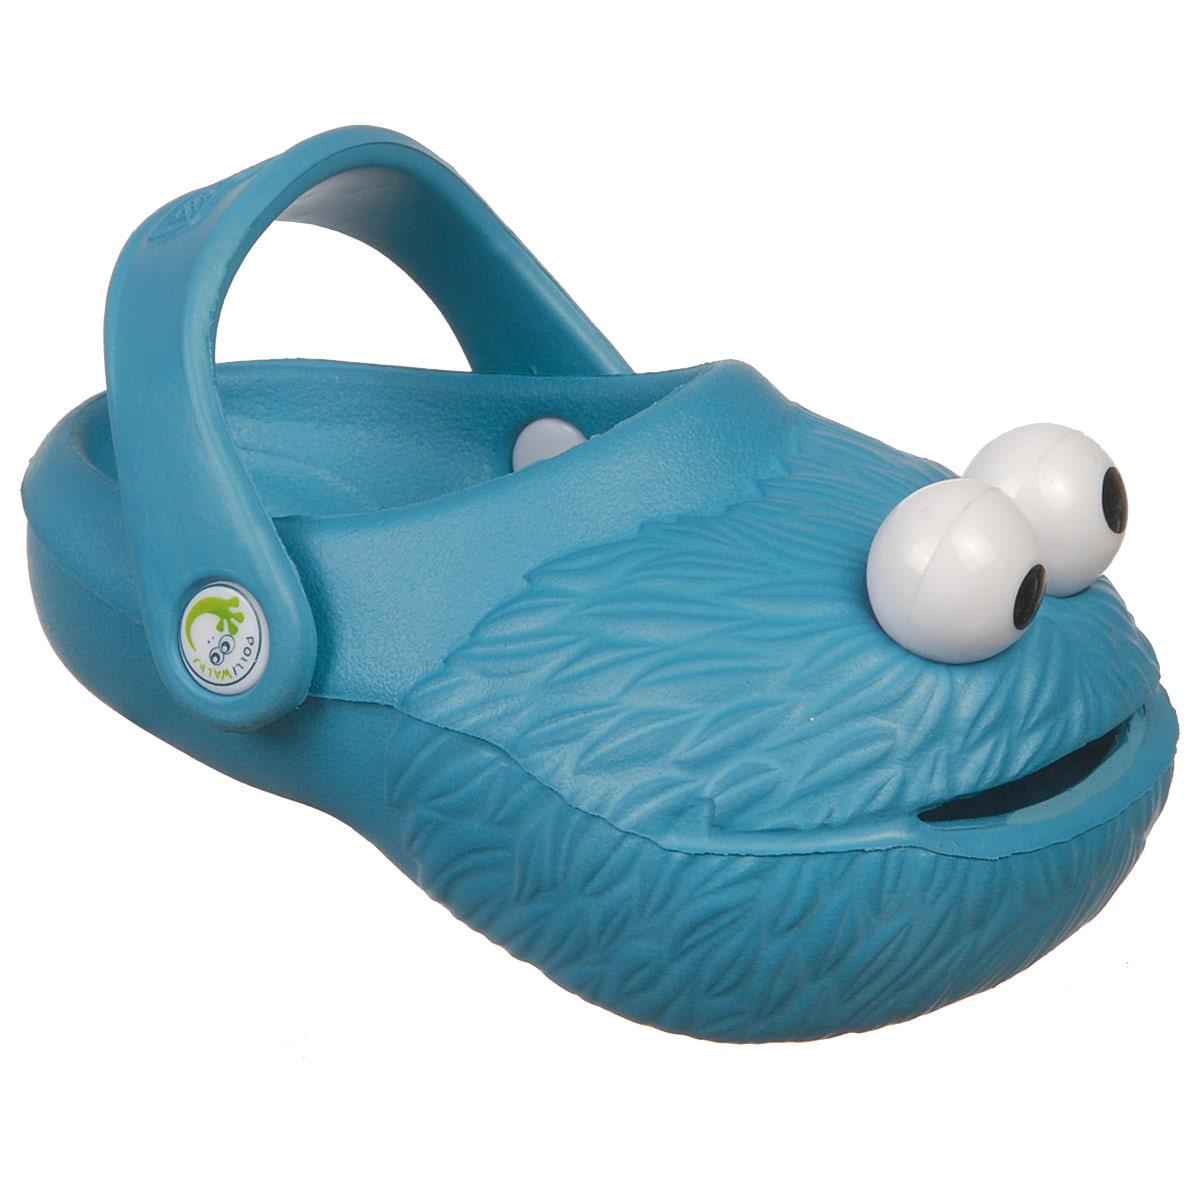 Polliwalks : Toddler shoes COOKIE MONSTER Blue # 9